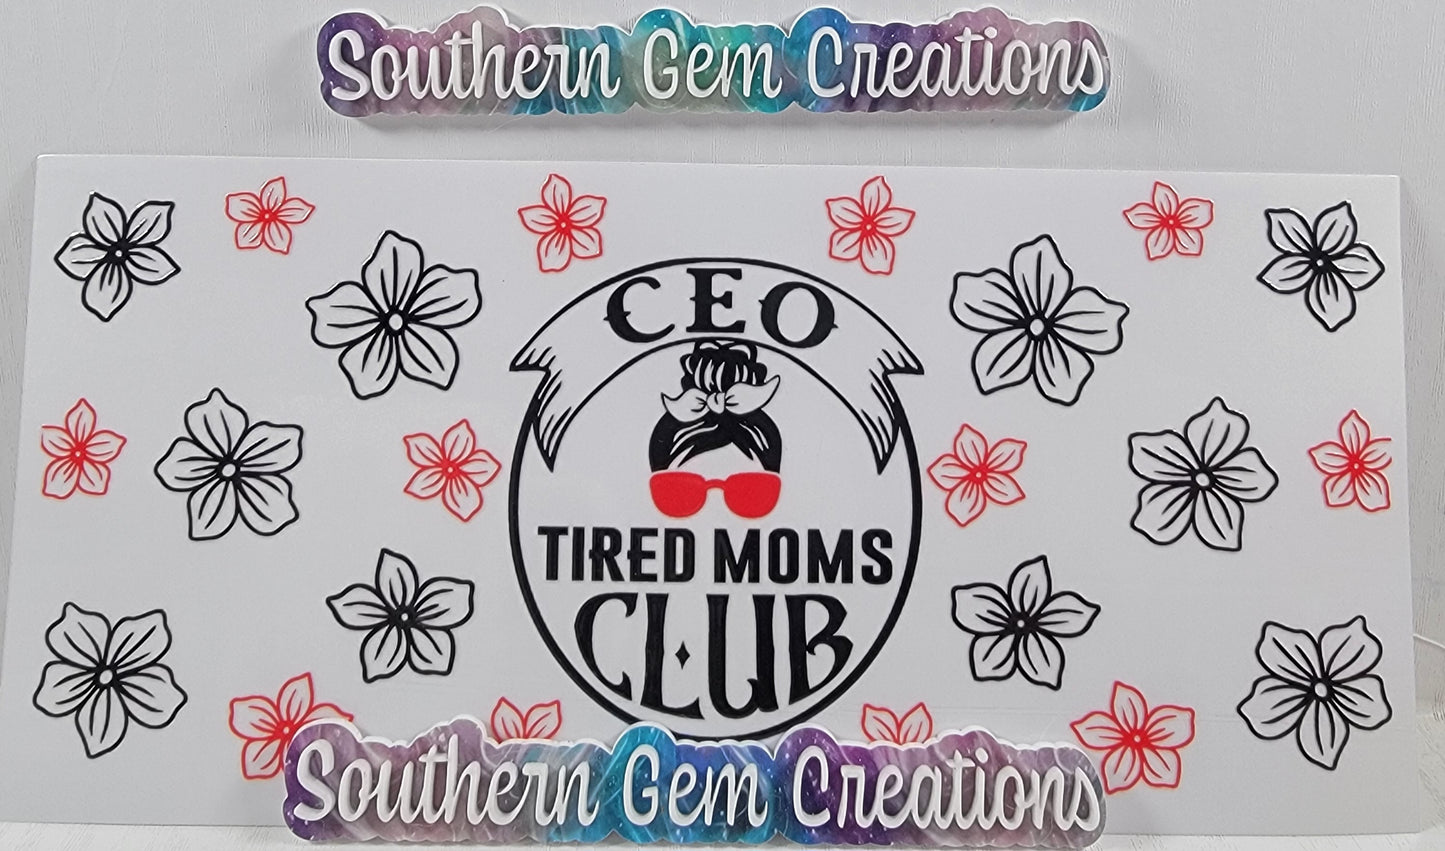 CEO Tired Moms Club - 16 oz Libby UV DTF Wrap RTS